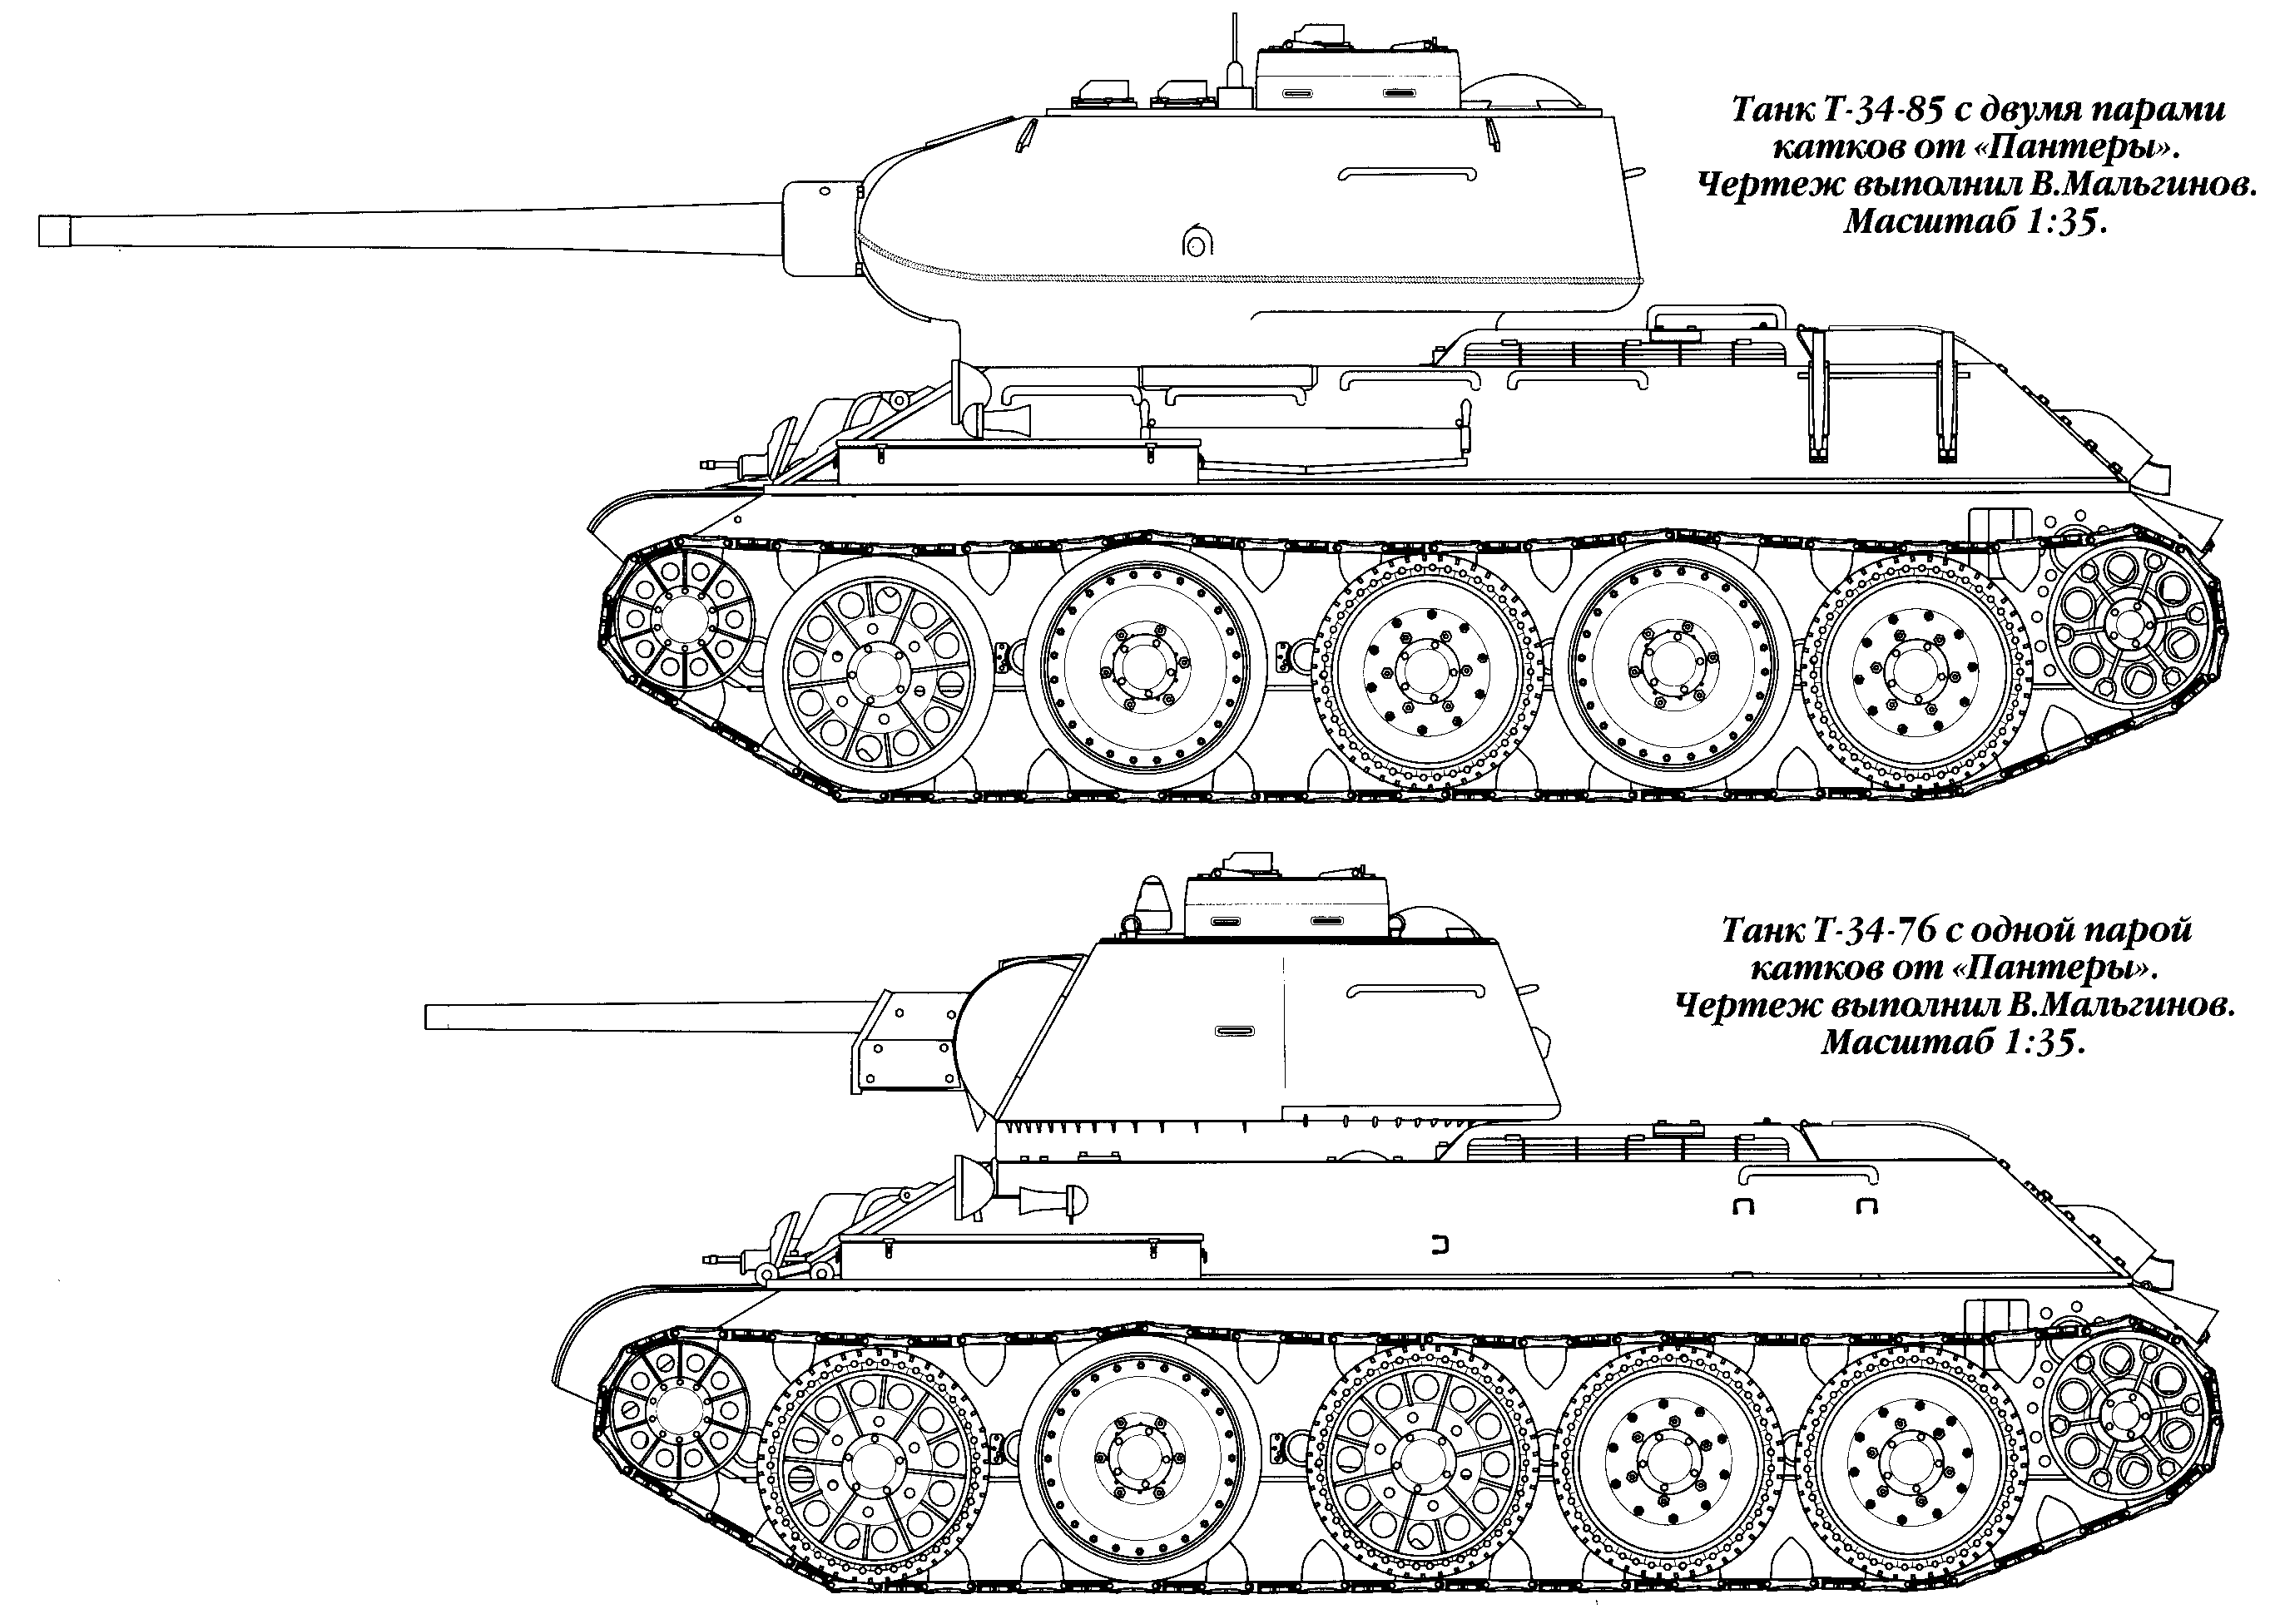 Цитата: Serg 122. http://armor.kiev.ua/Tanks/WWII/T34/tam4_02. 